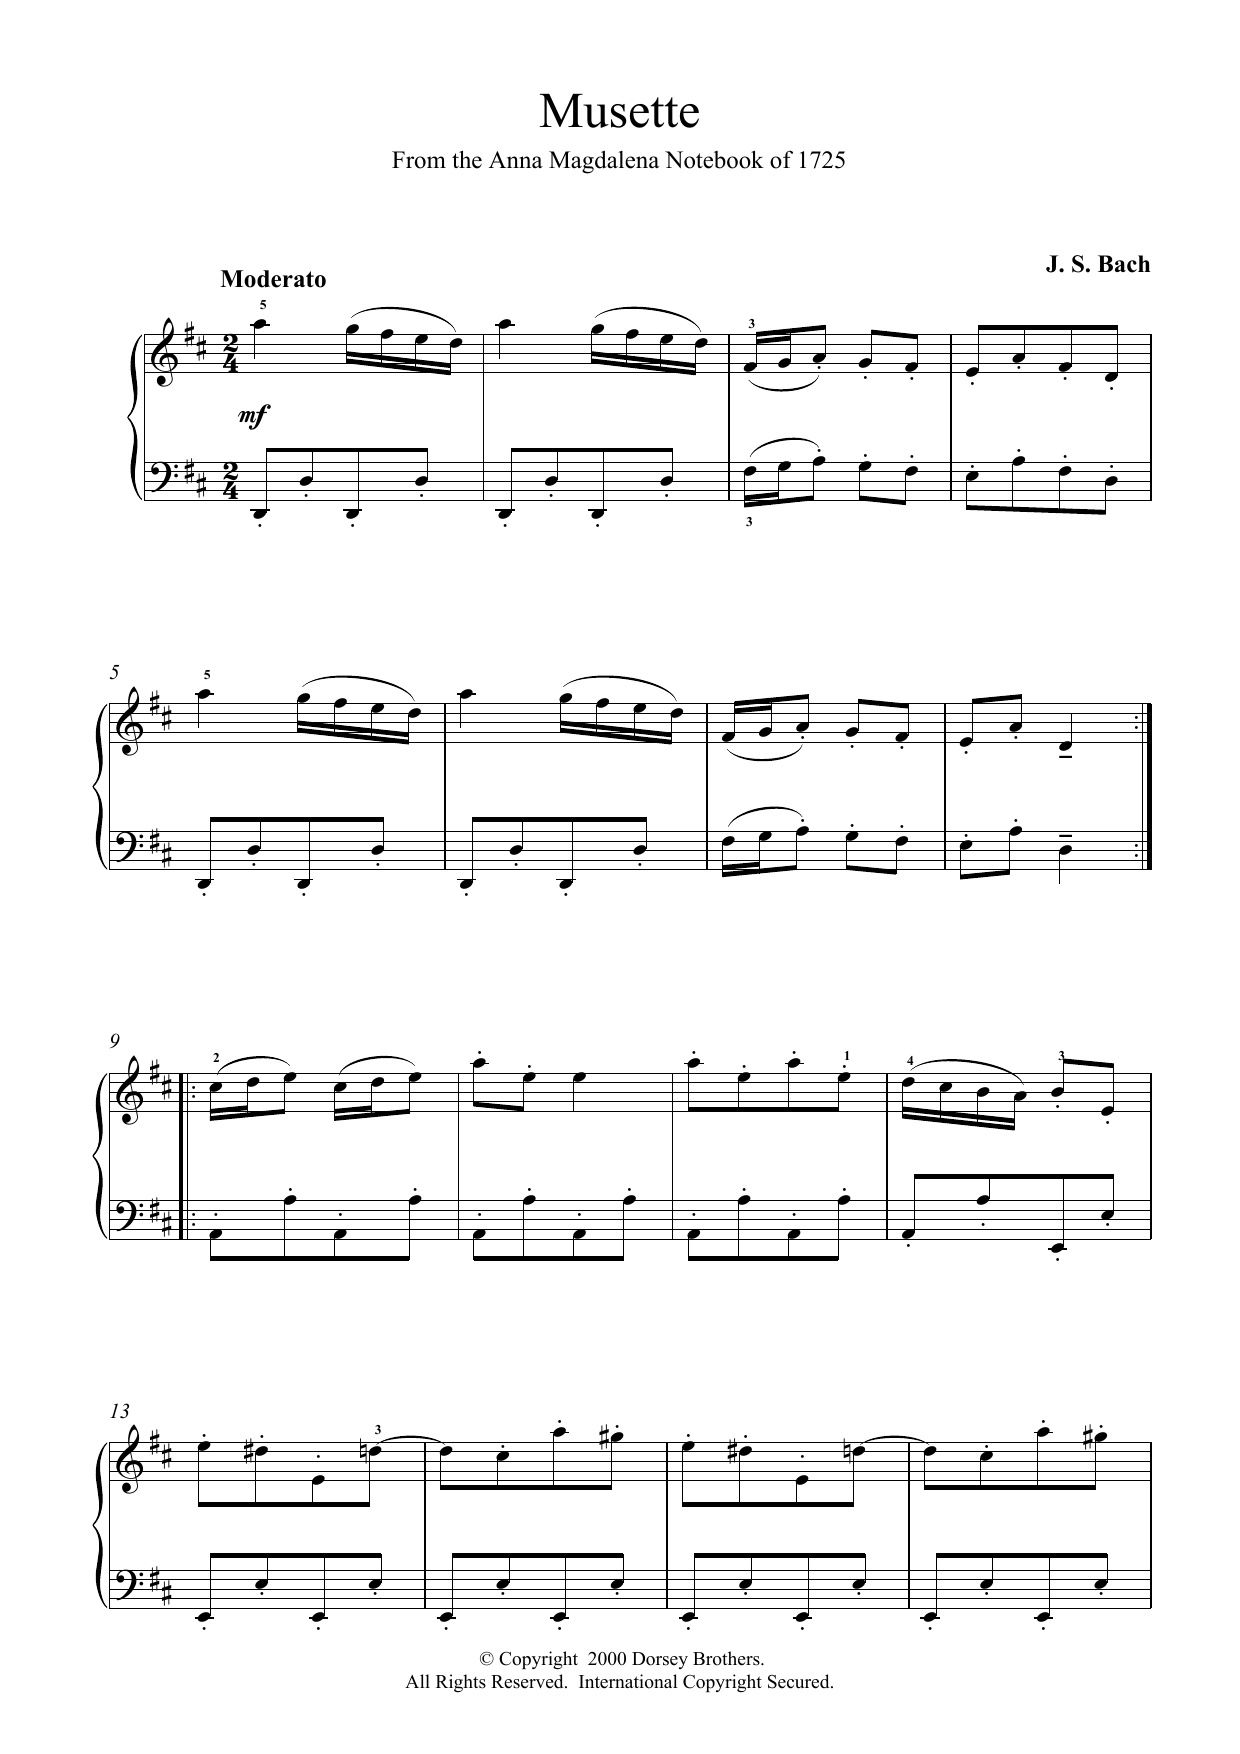 Johann Sebastian Bach Musette In D Major, BWV App. 126 sheet music notes and chords. Download Printable PDF.